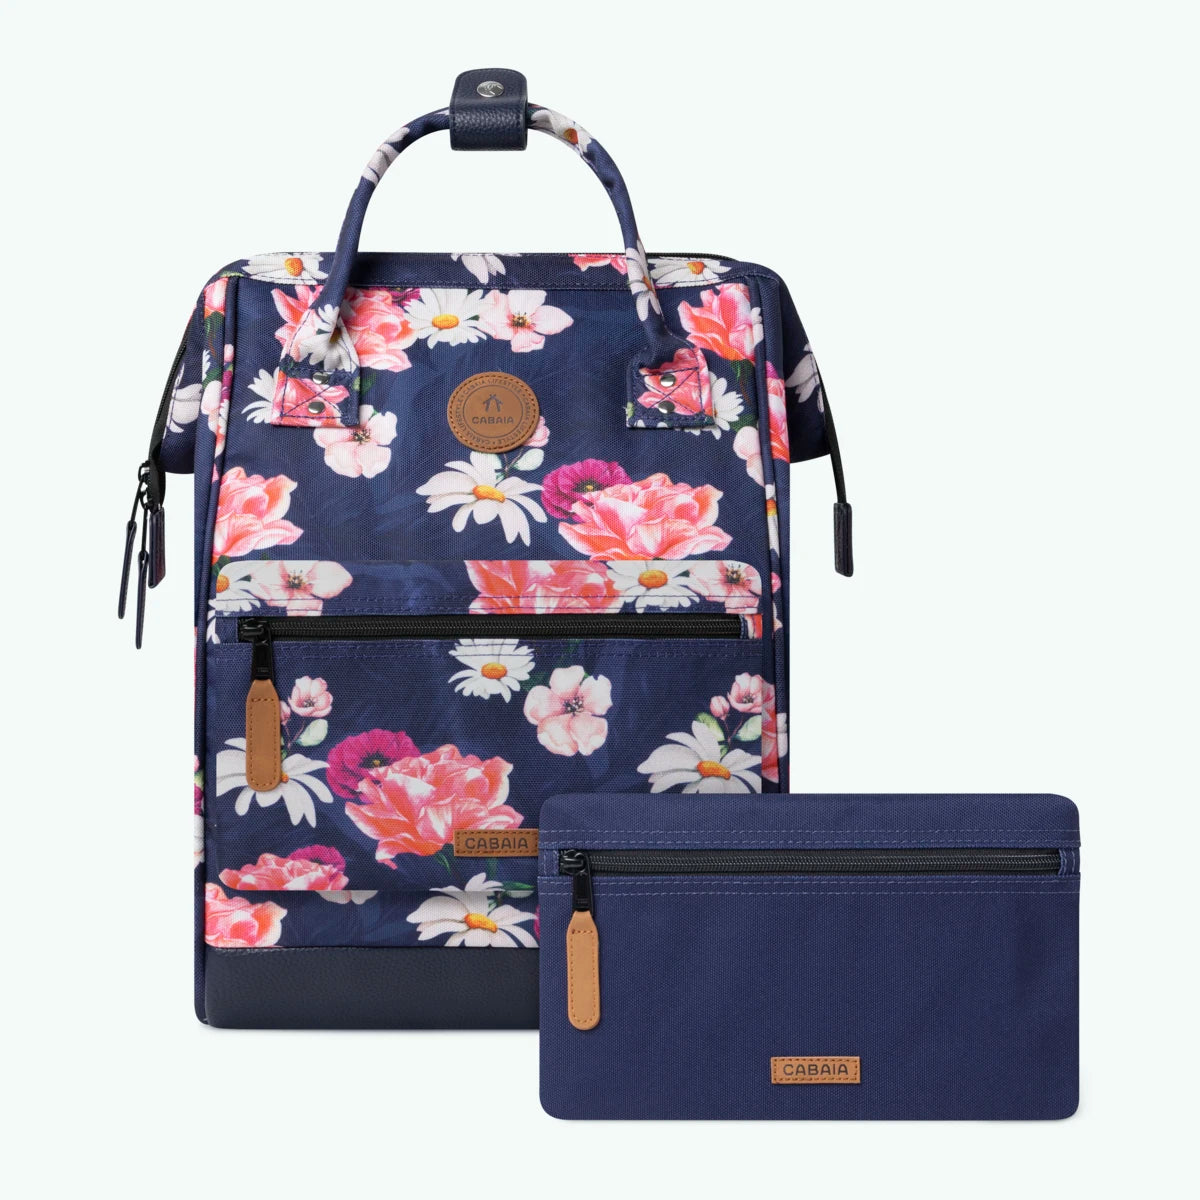 adventurer-pink-medium-backpack